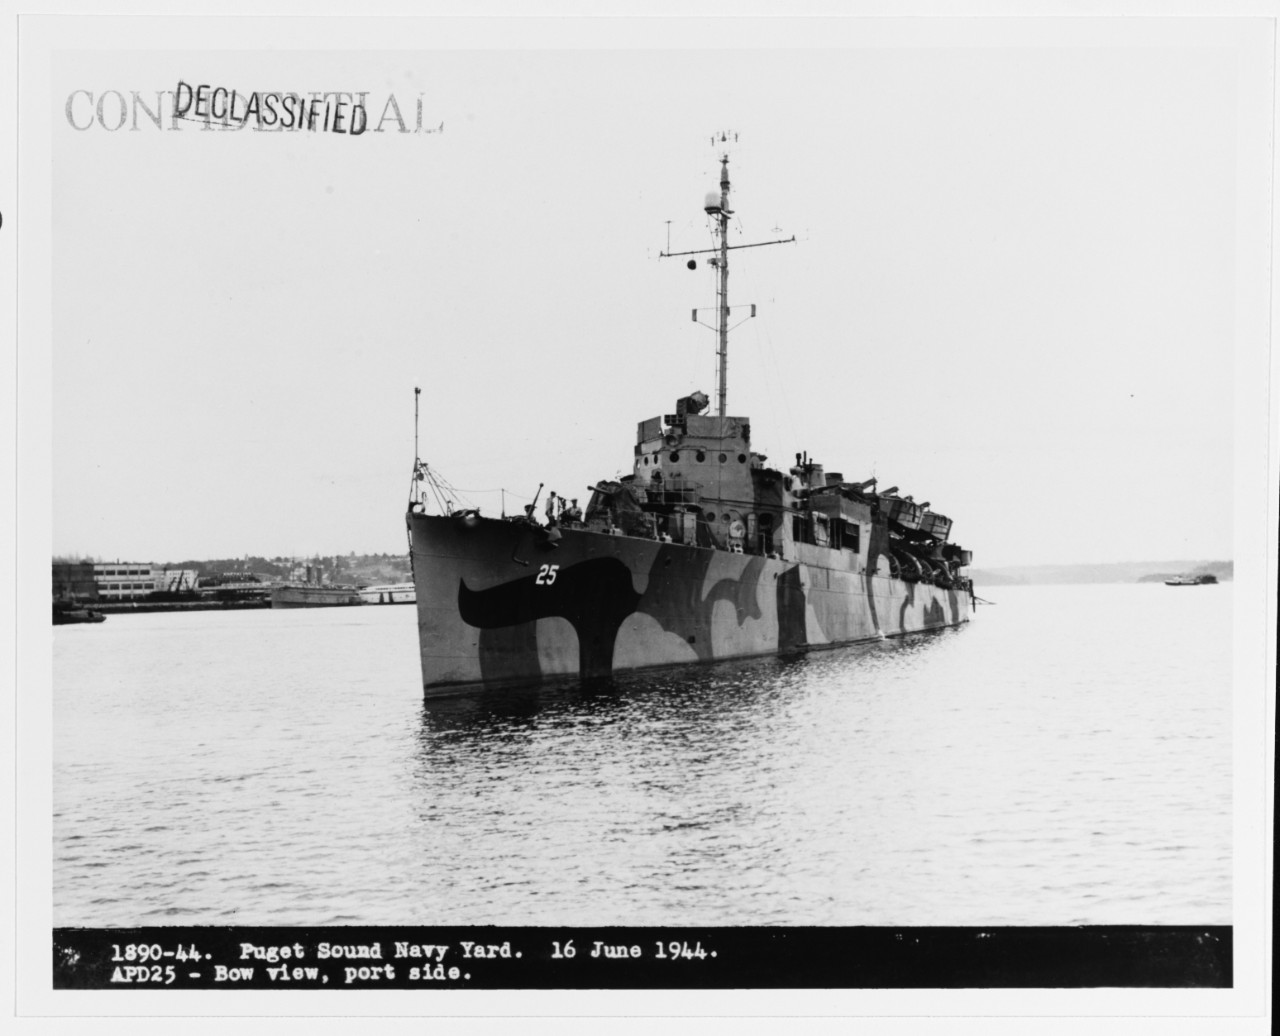 USS RATHBURNE (APD-25)